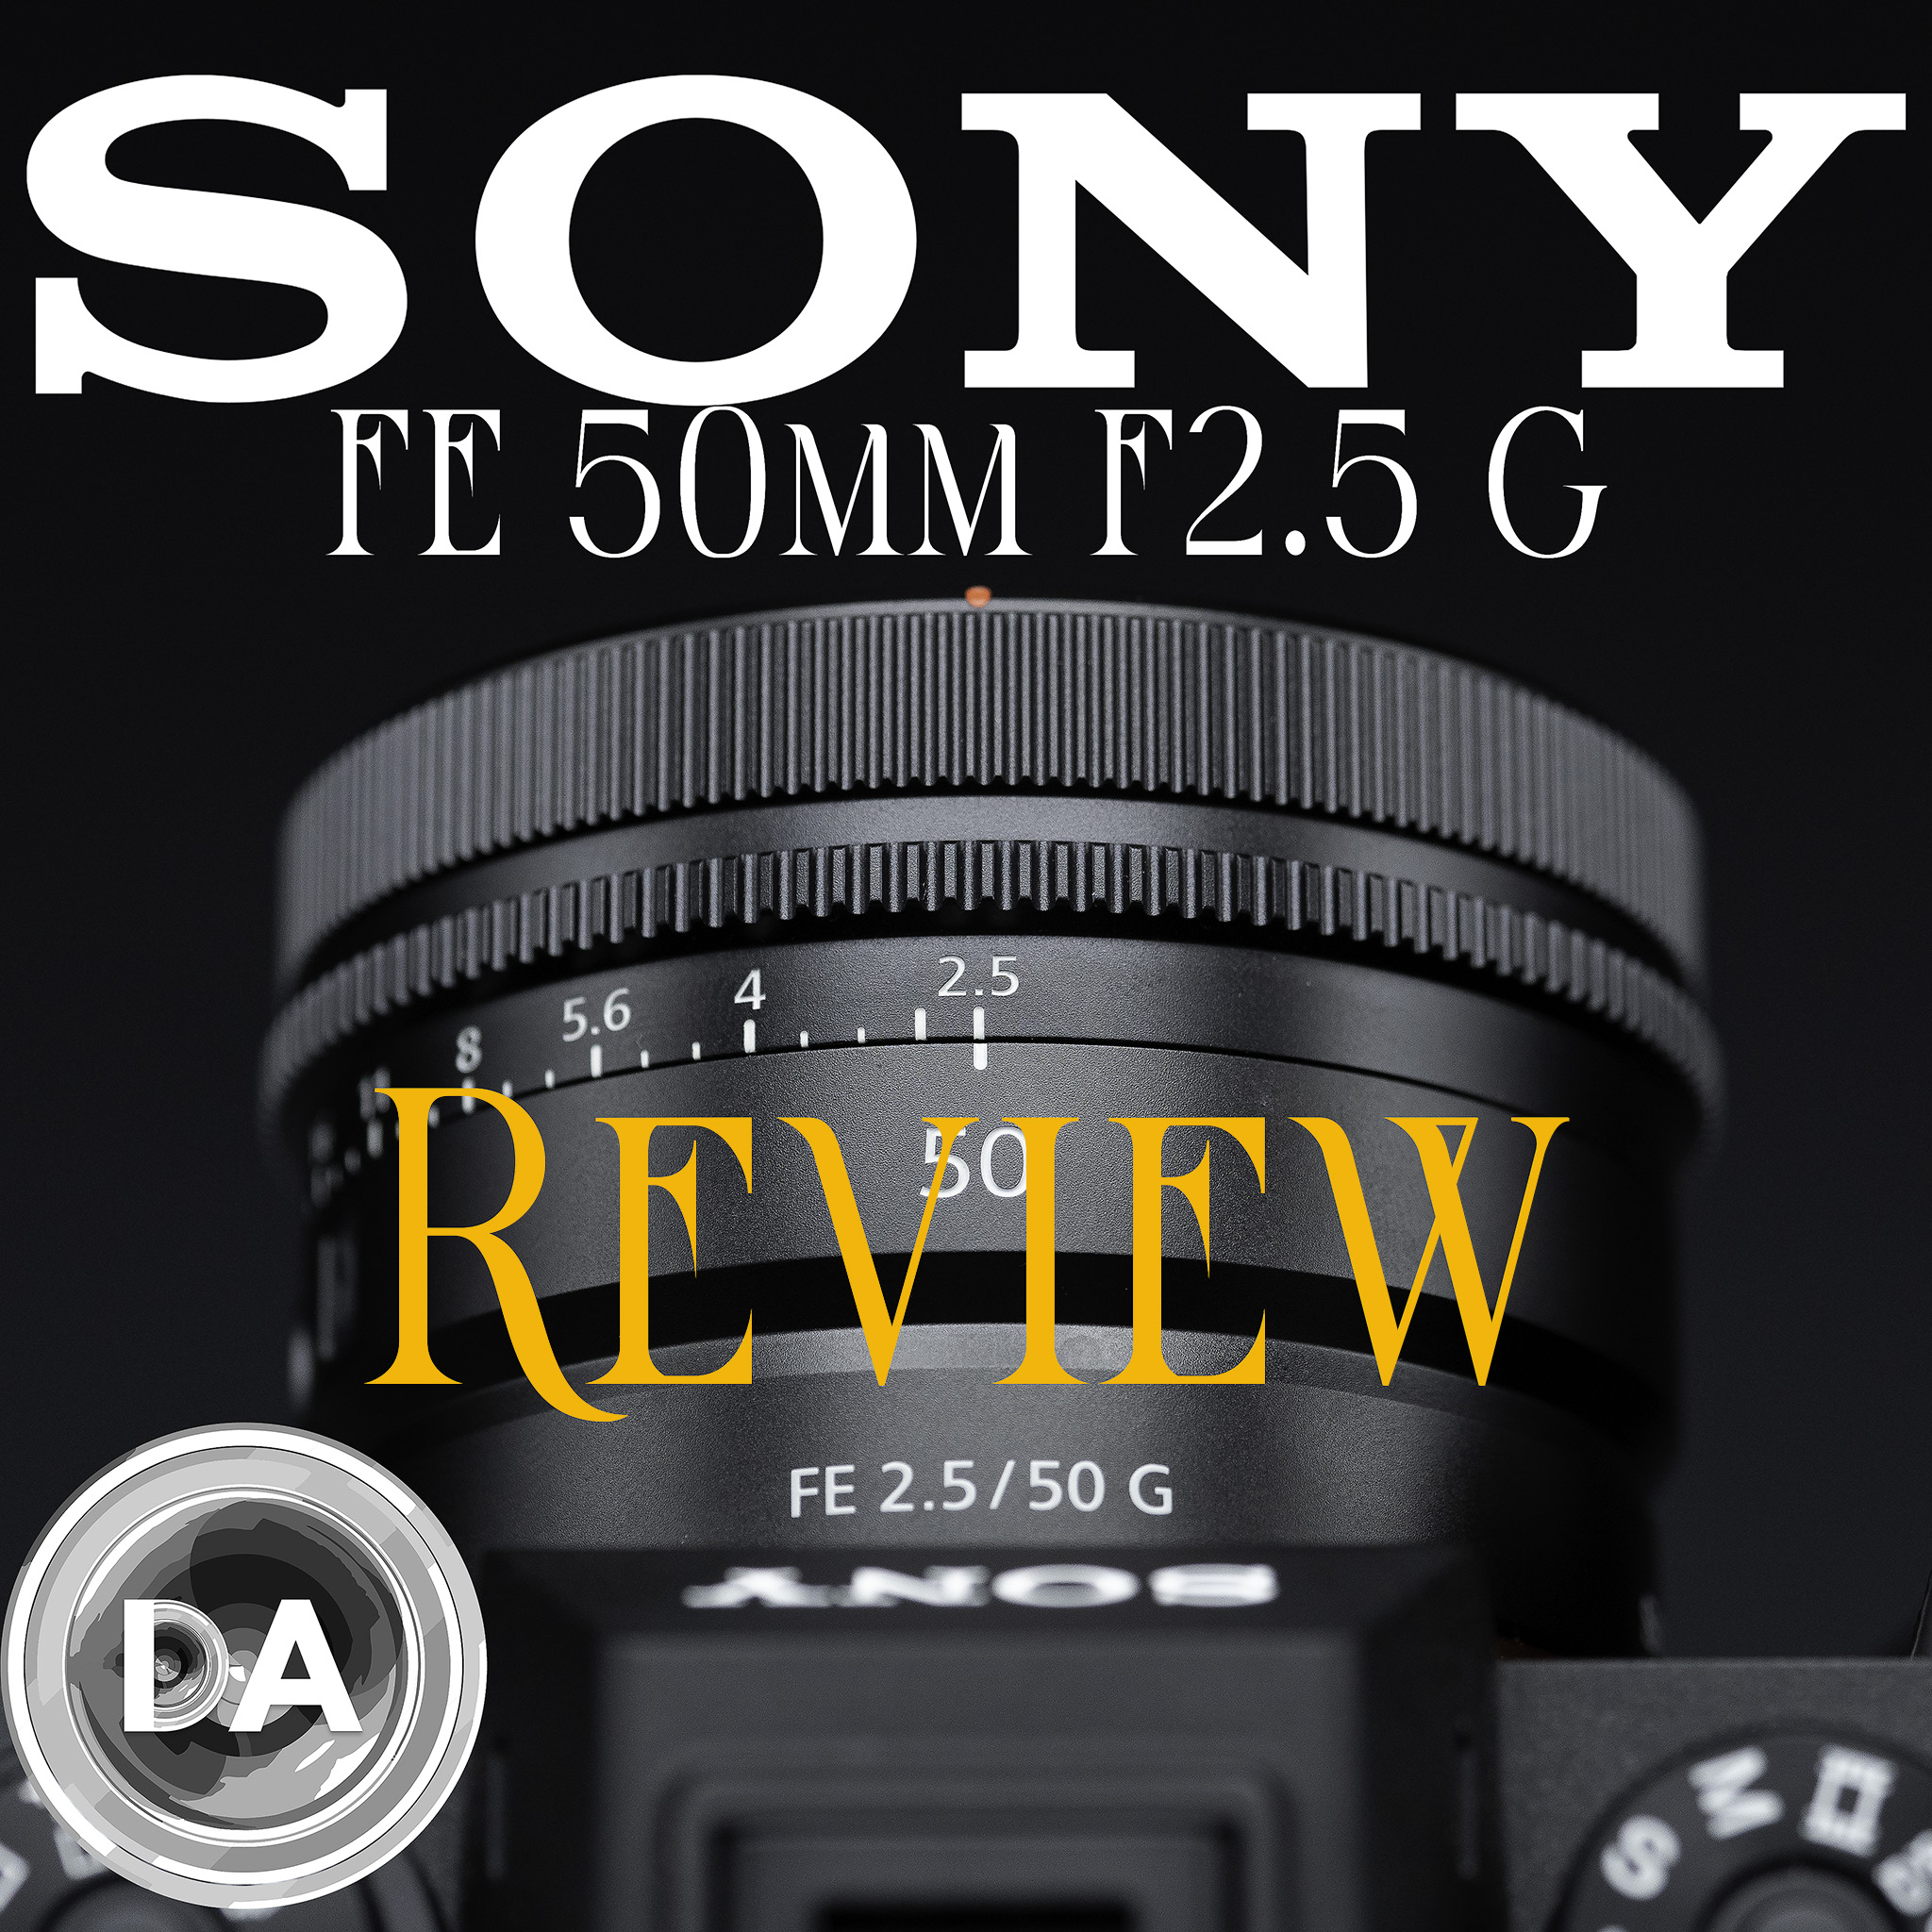 Sony FE 50mm F2.5 G Review - DustinAbbott.net